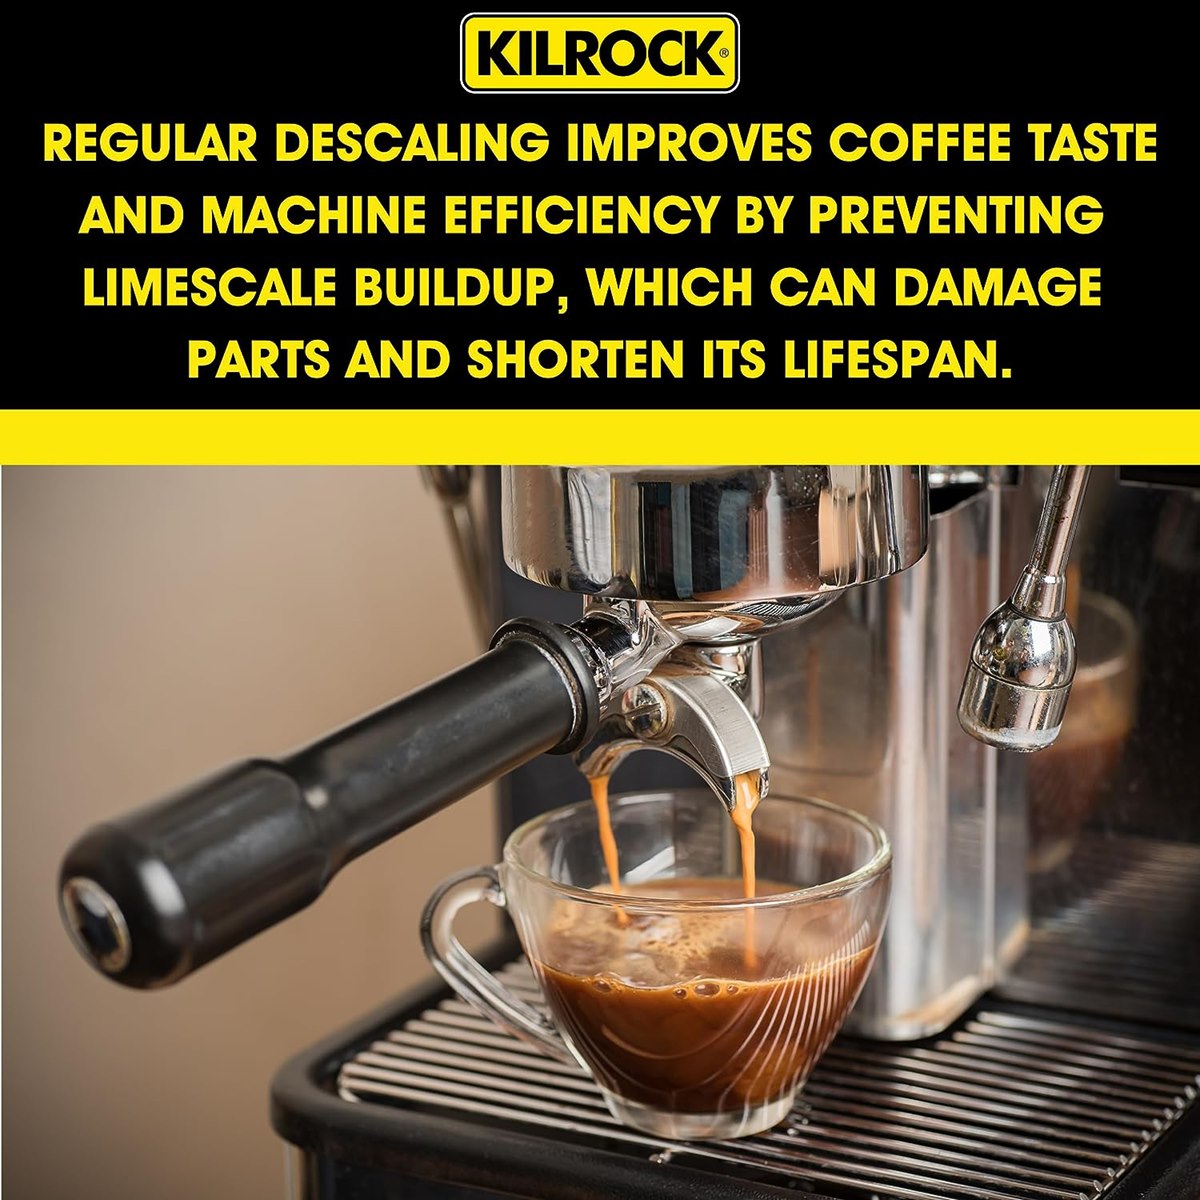 Kilrock Service Pro Coffee Machine Descaler & Cleaner 2 x 150ml